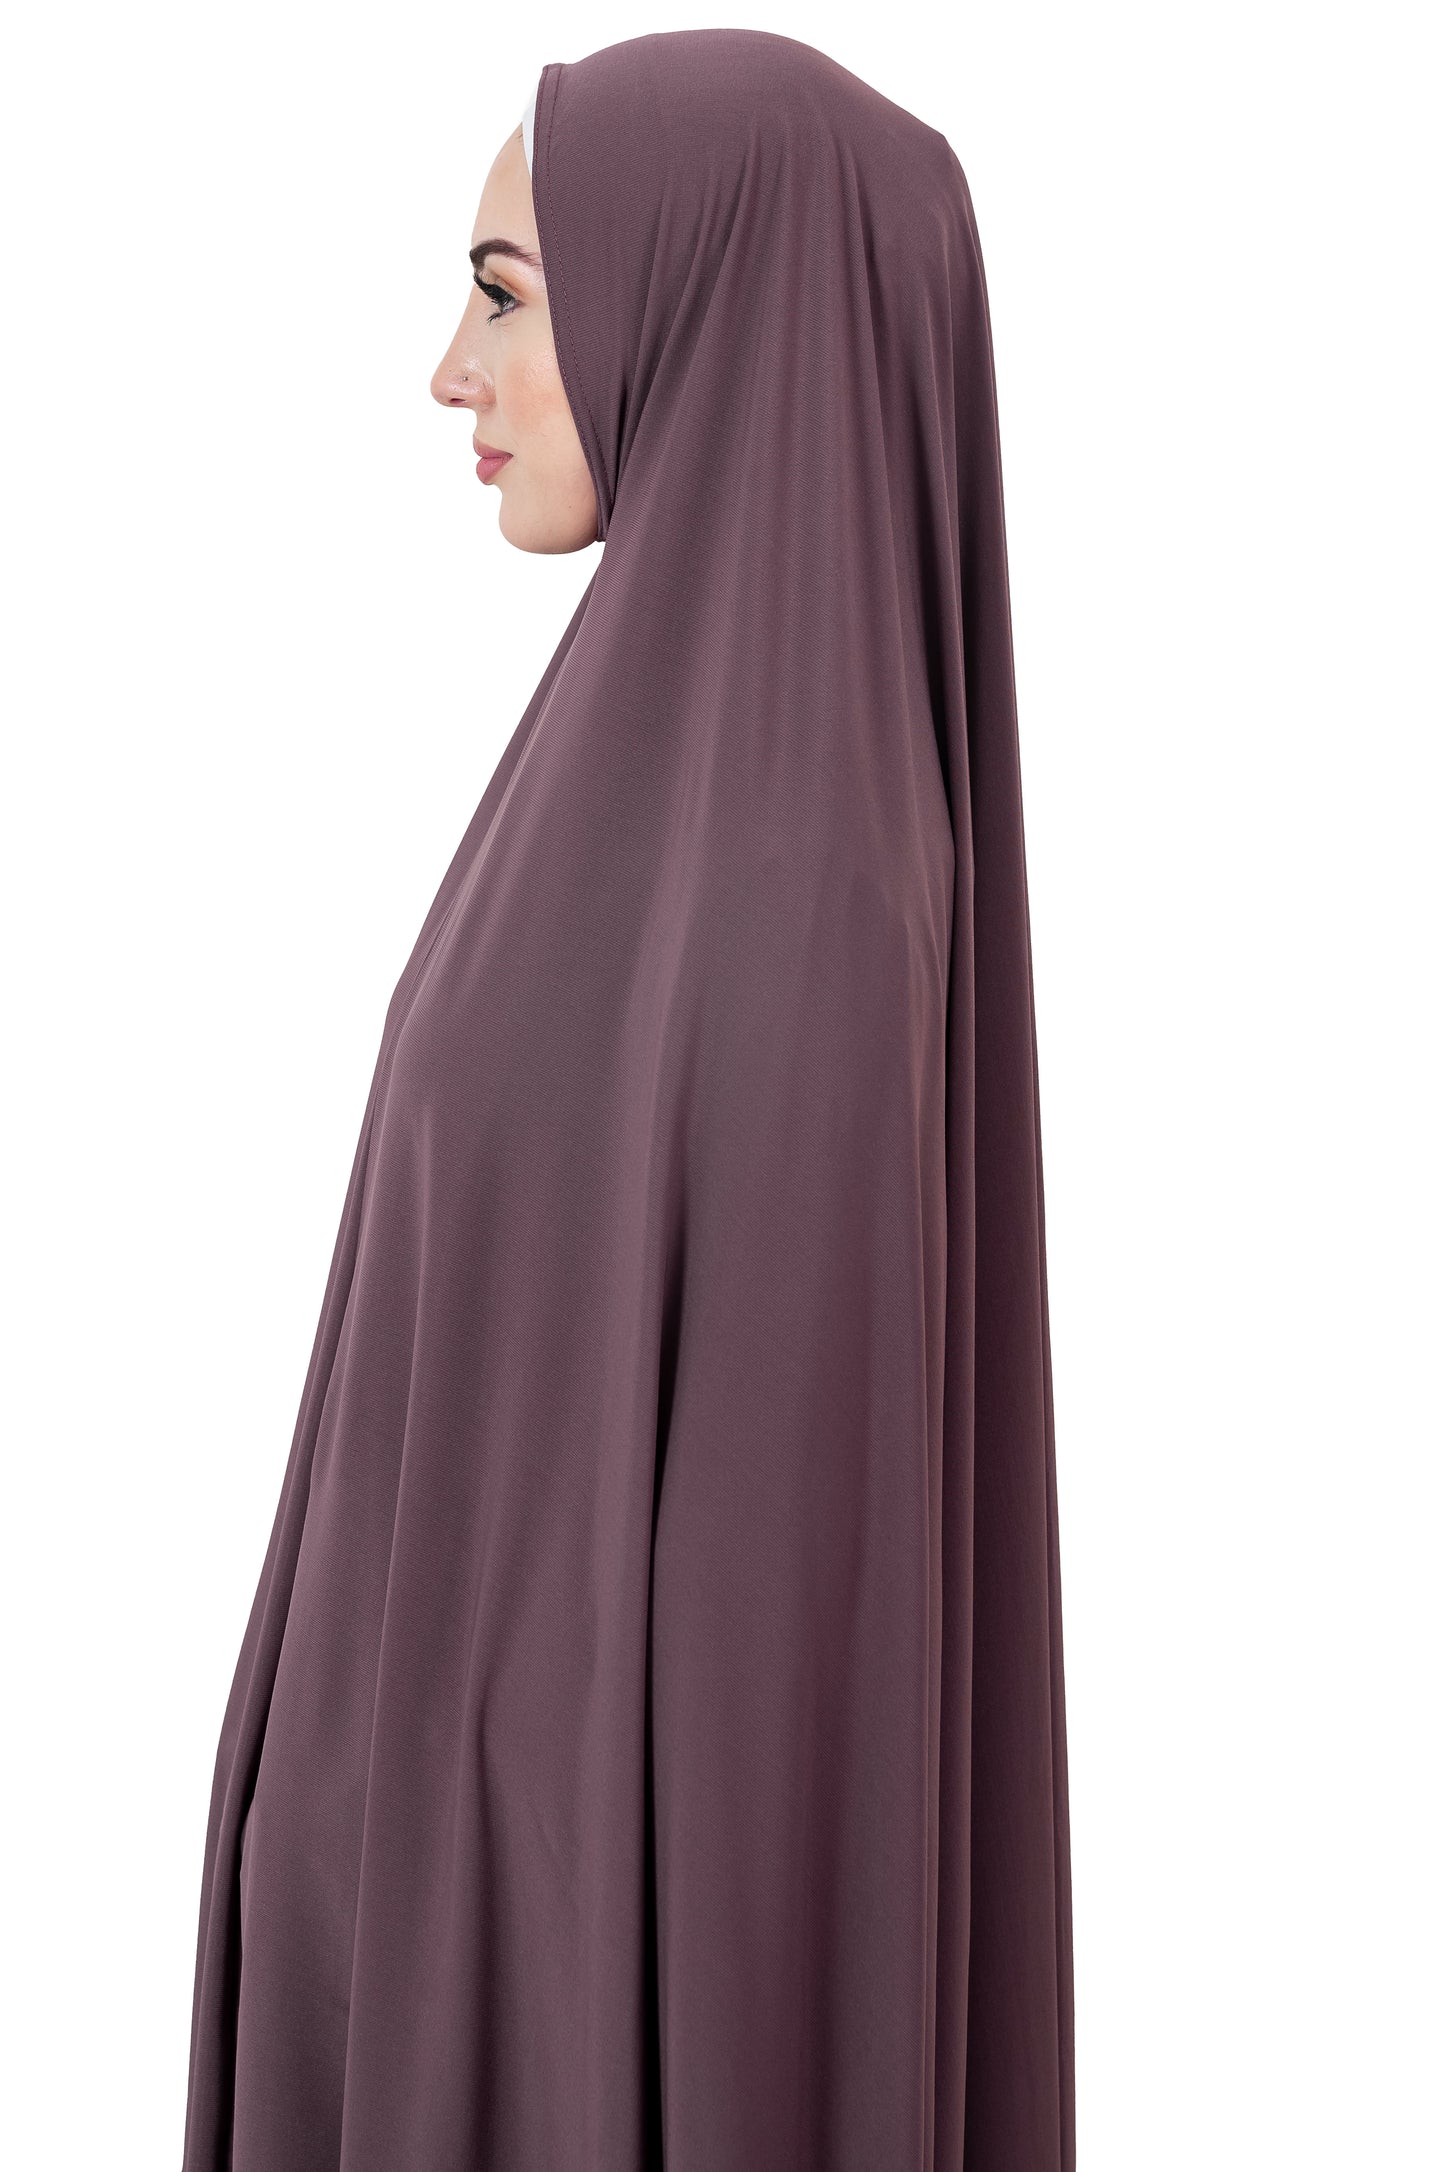 Standard Length Sleeved Jelbab in Rosey Brown